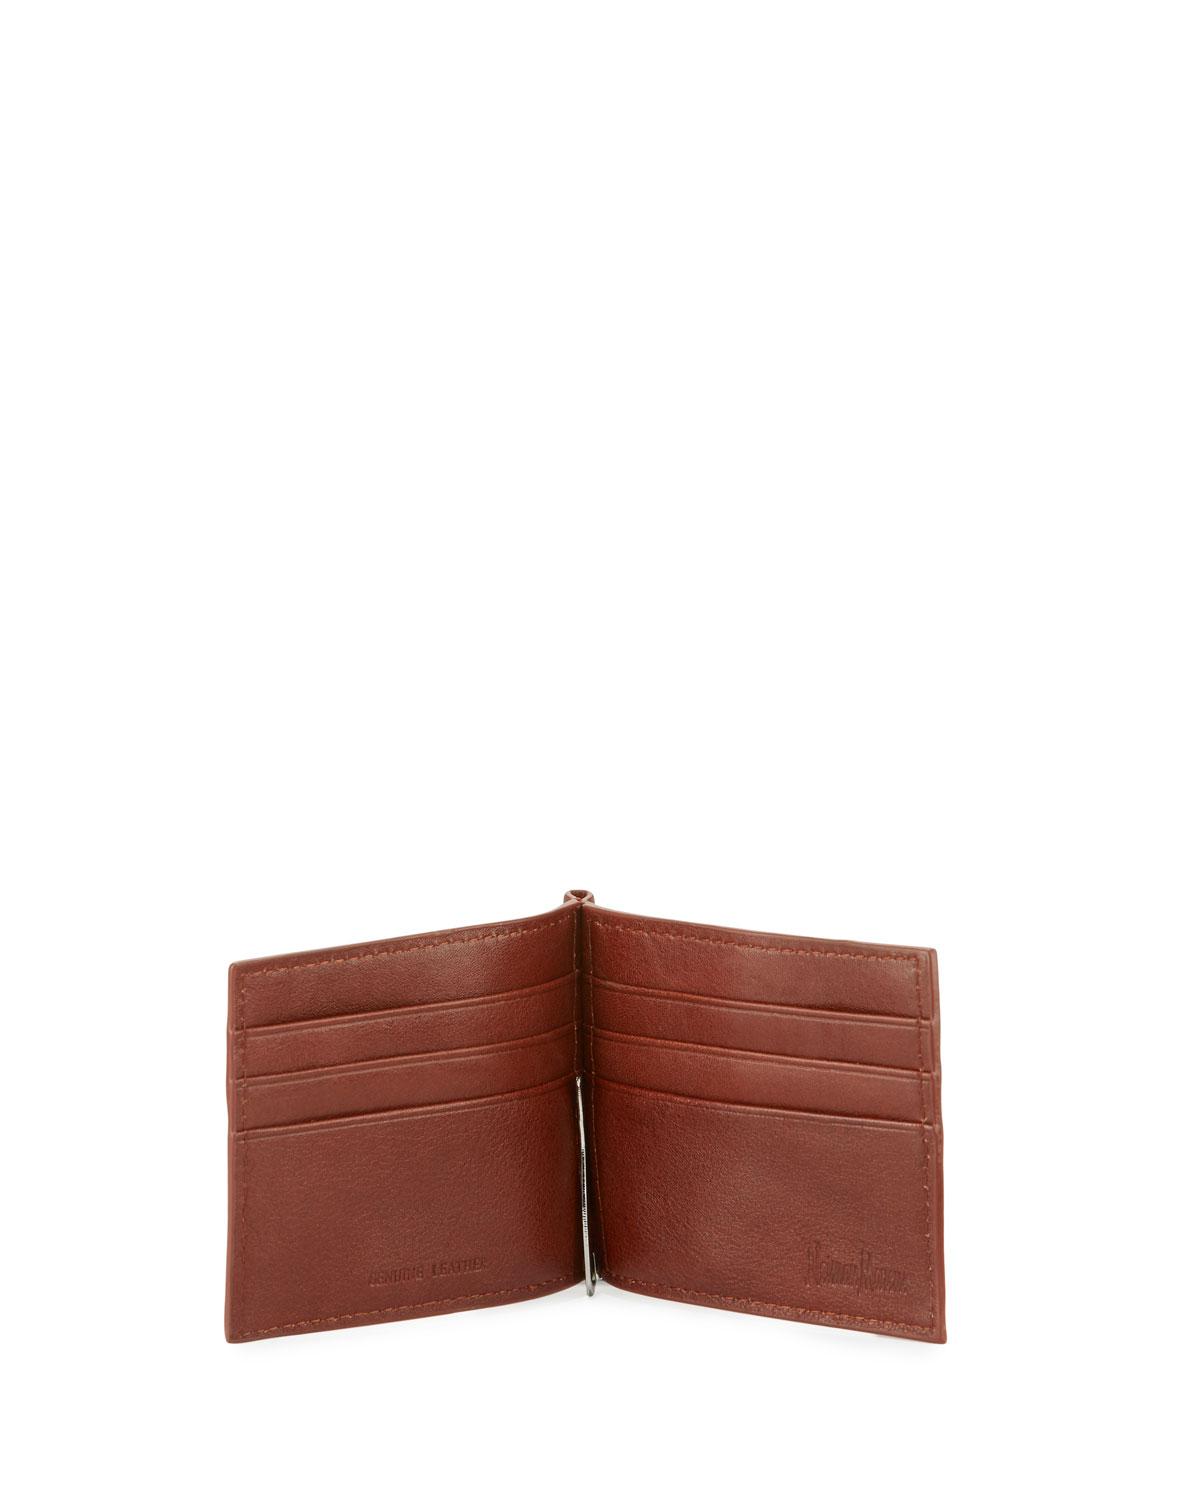 Neiman Marcus Leather Money-clip Bi-fold Wallet in Brown for Men - Lyst